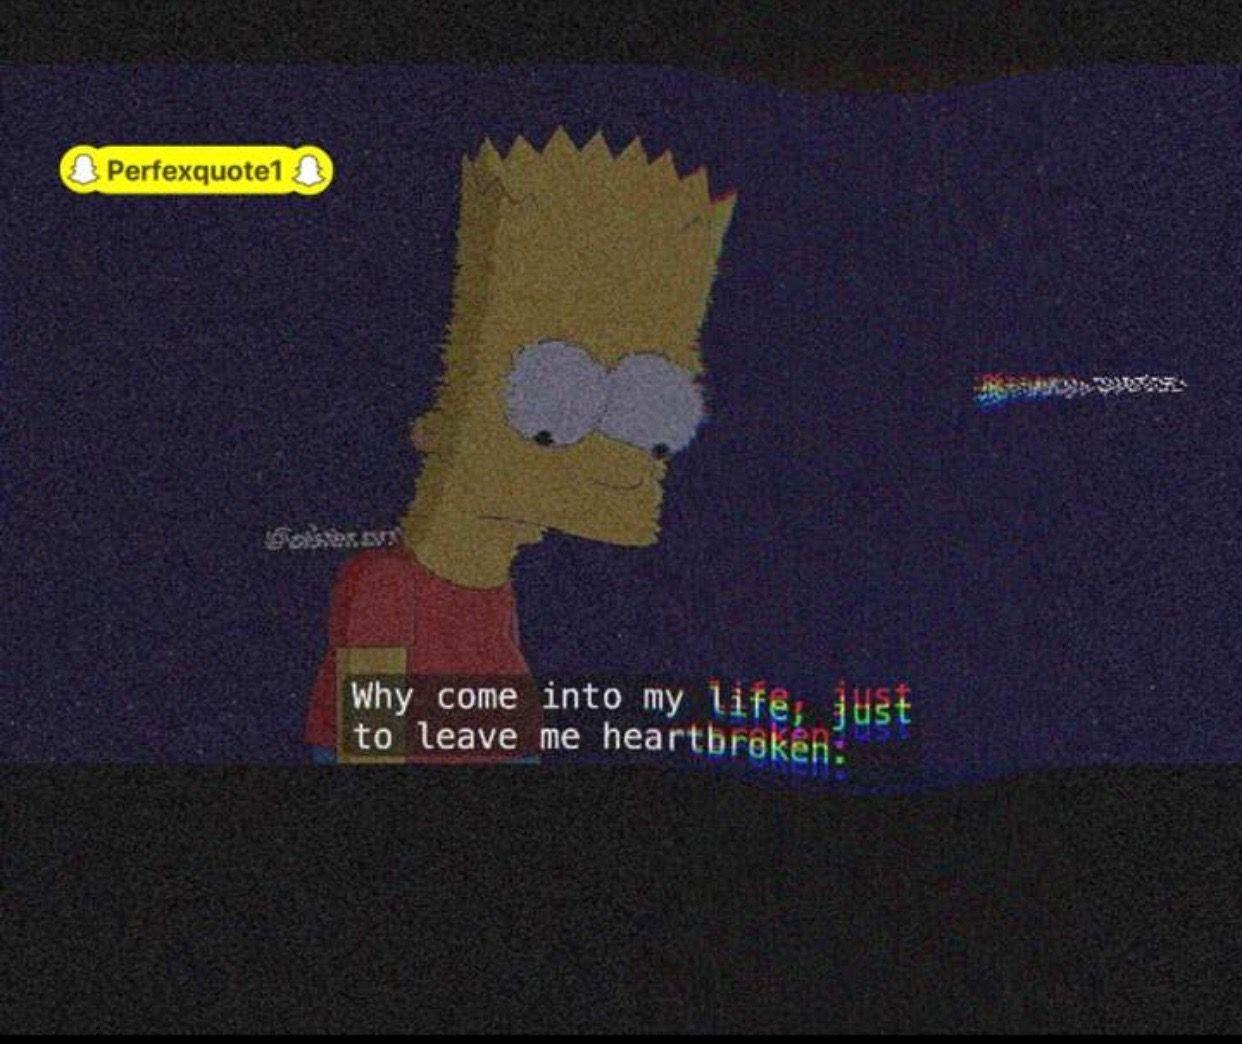 Download Sad Bart Simpsons Alone Wallpaper